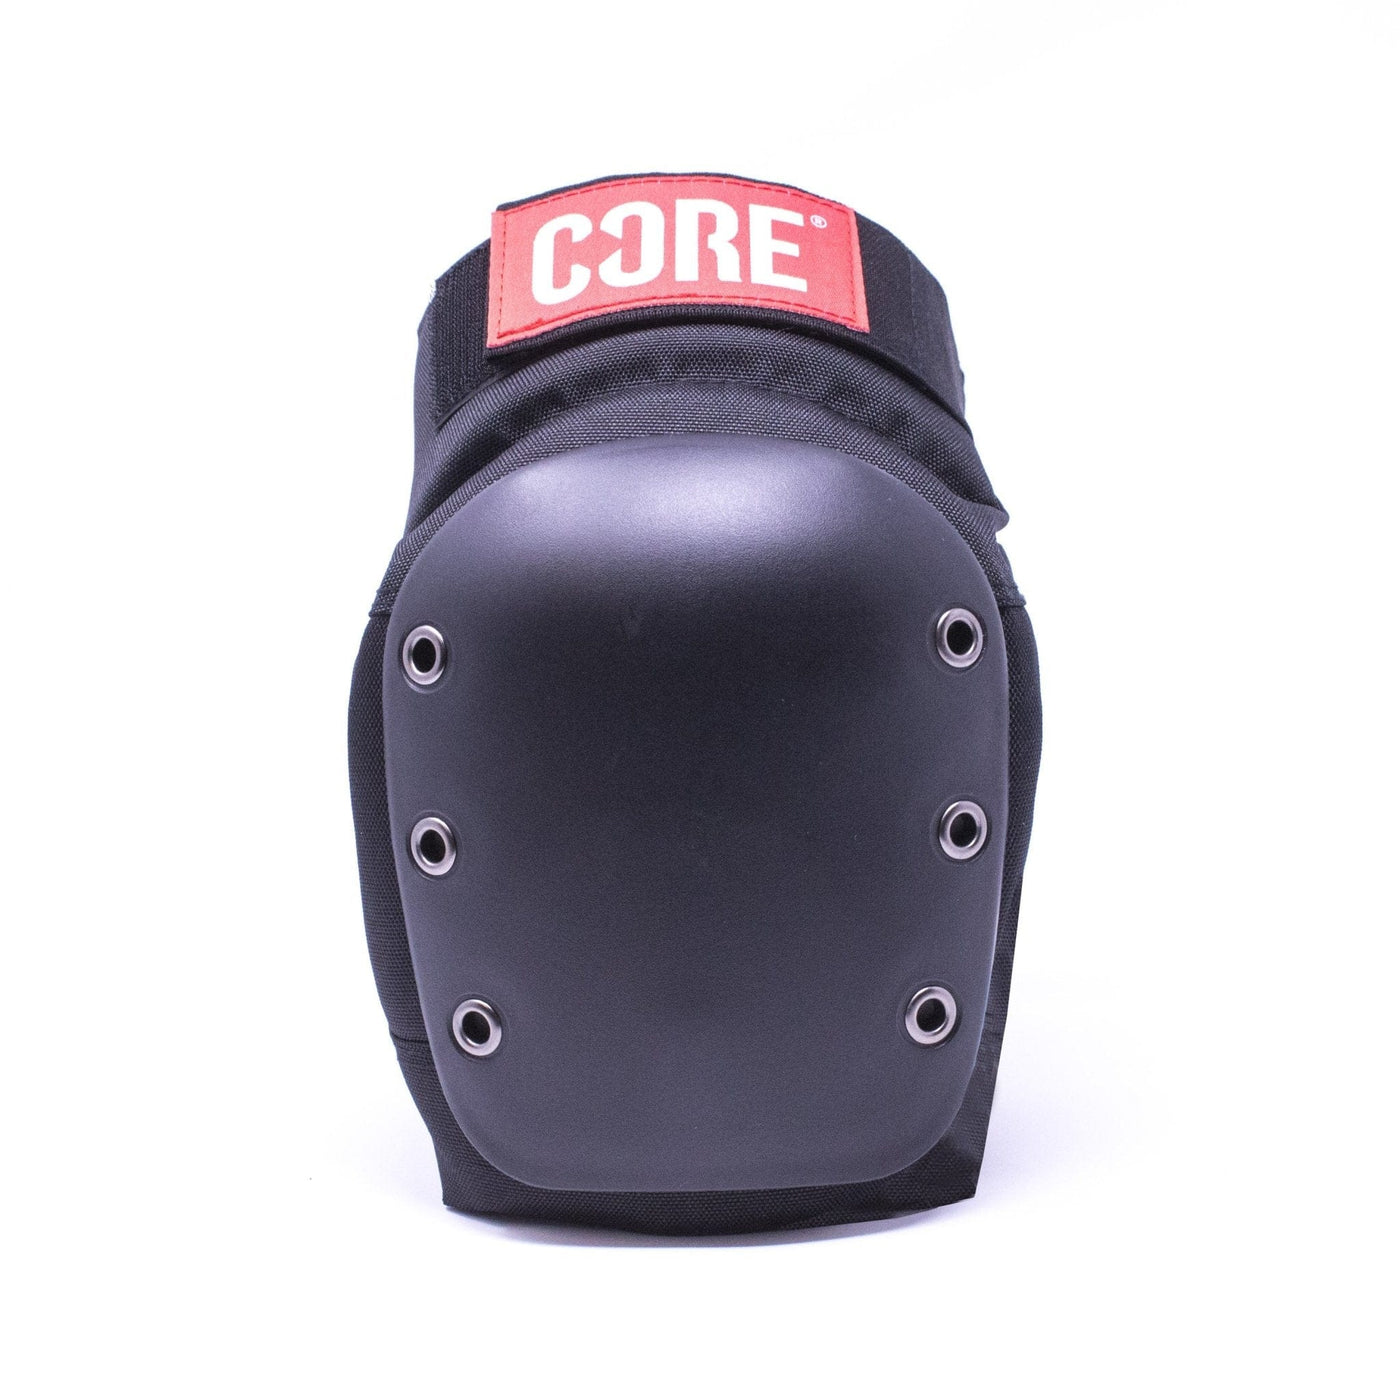 CORE Protection Triple Pro Street Pad Set (Knee/Elbow/Wrist) I Skateboard Protective Gear Alt Knee Pad